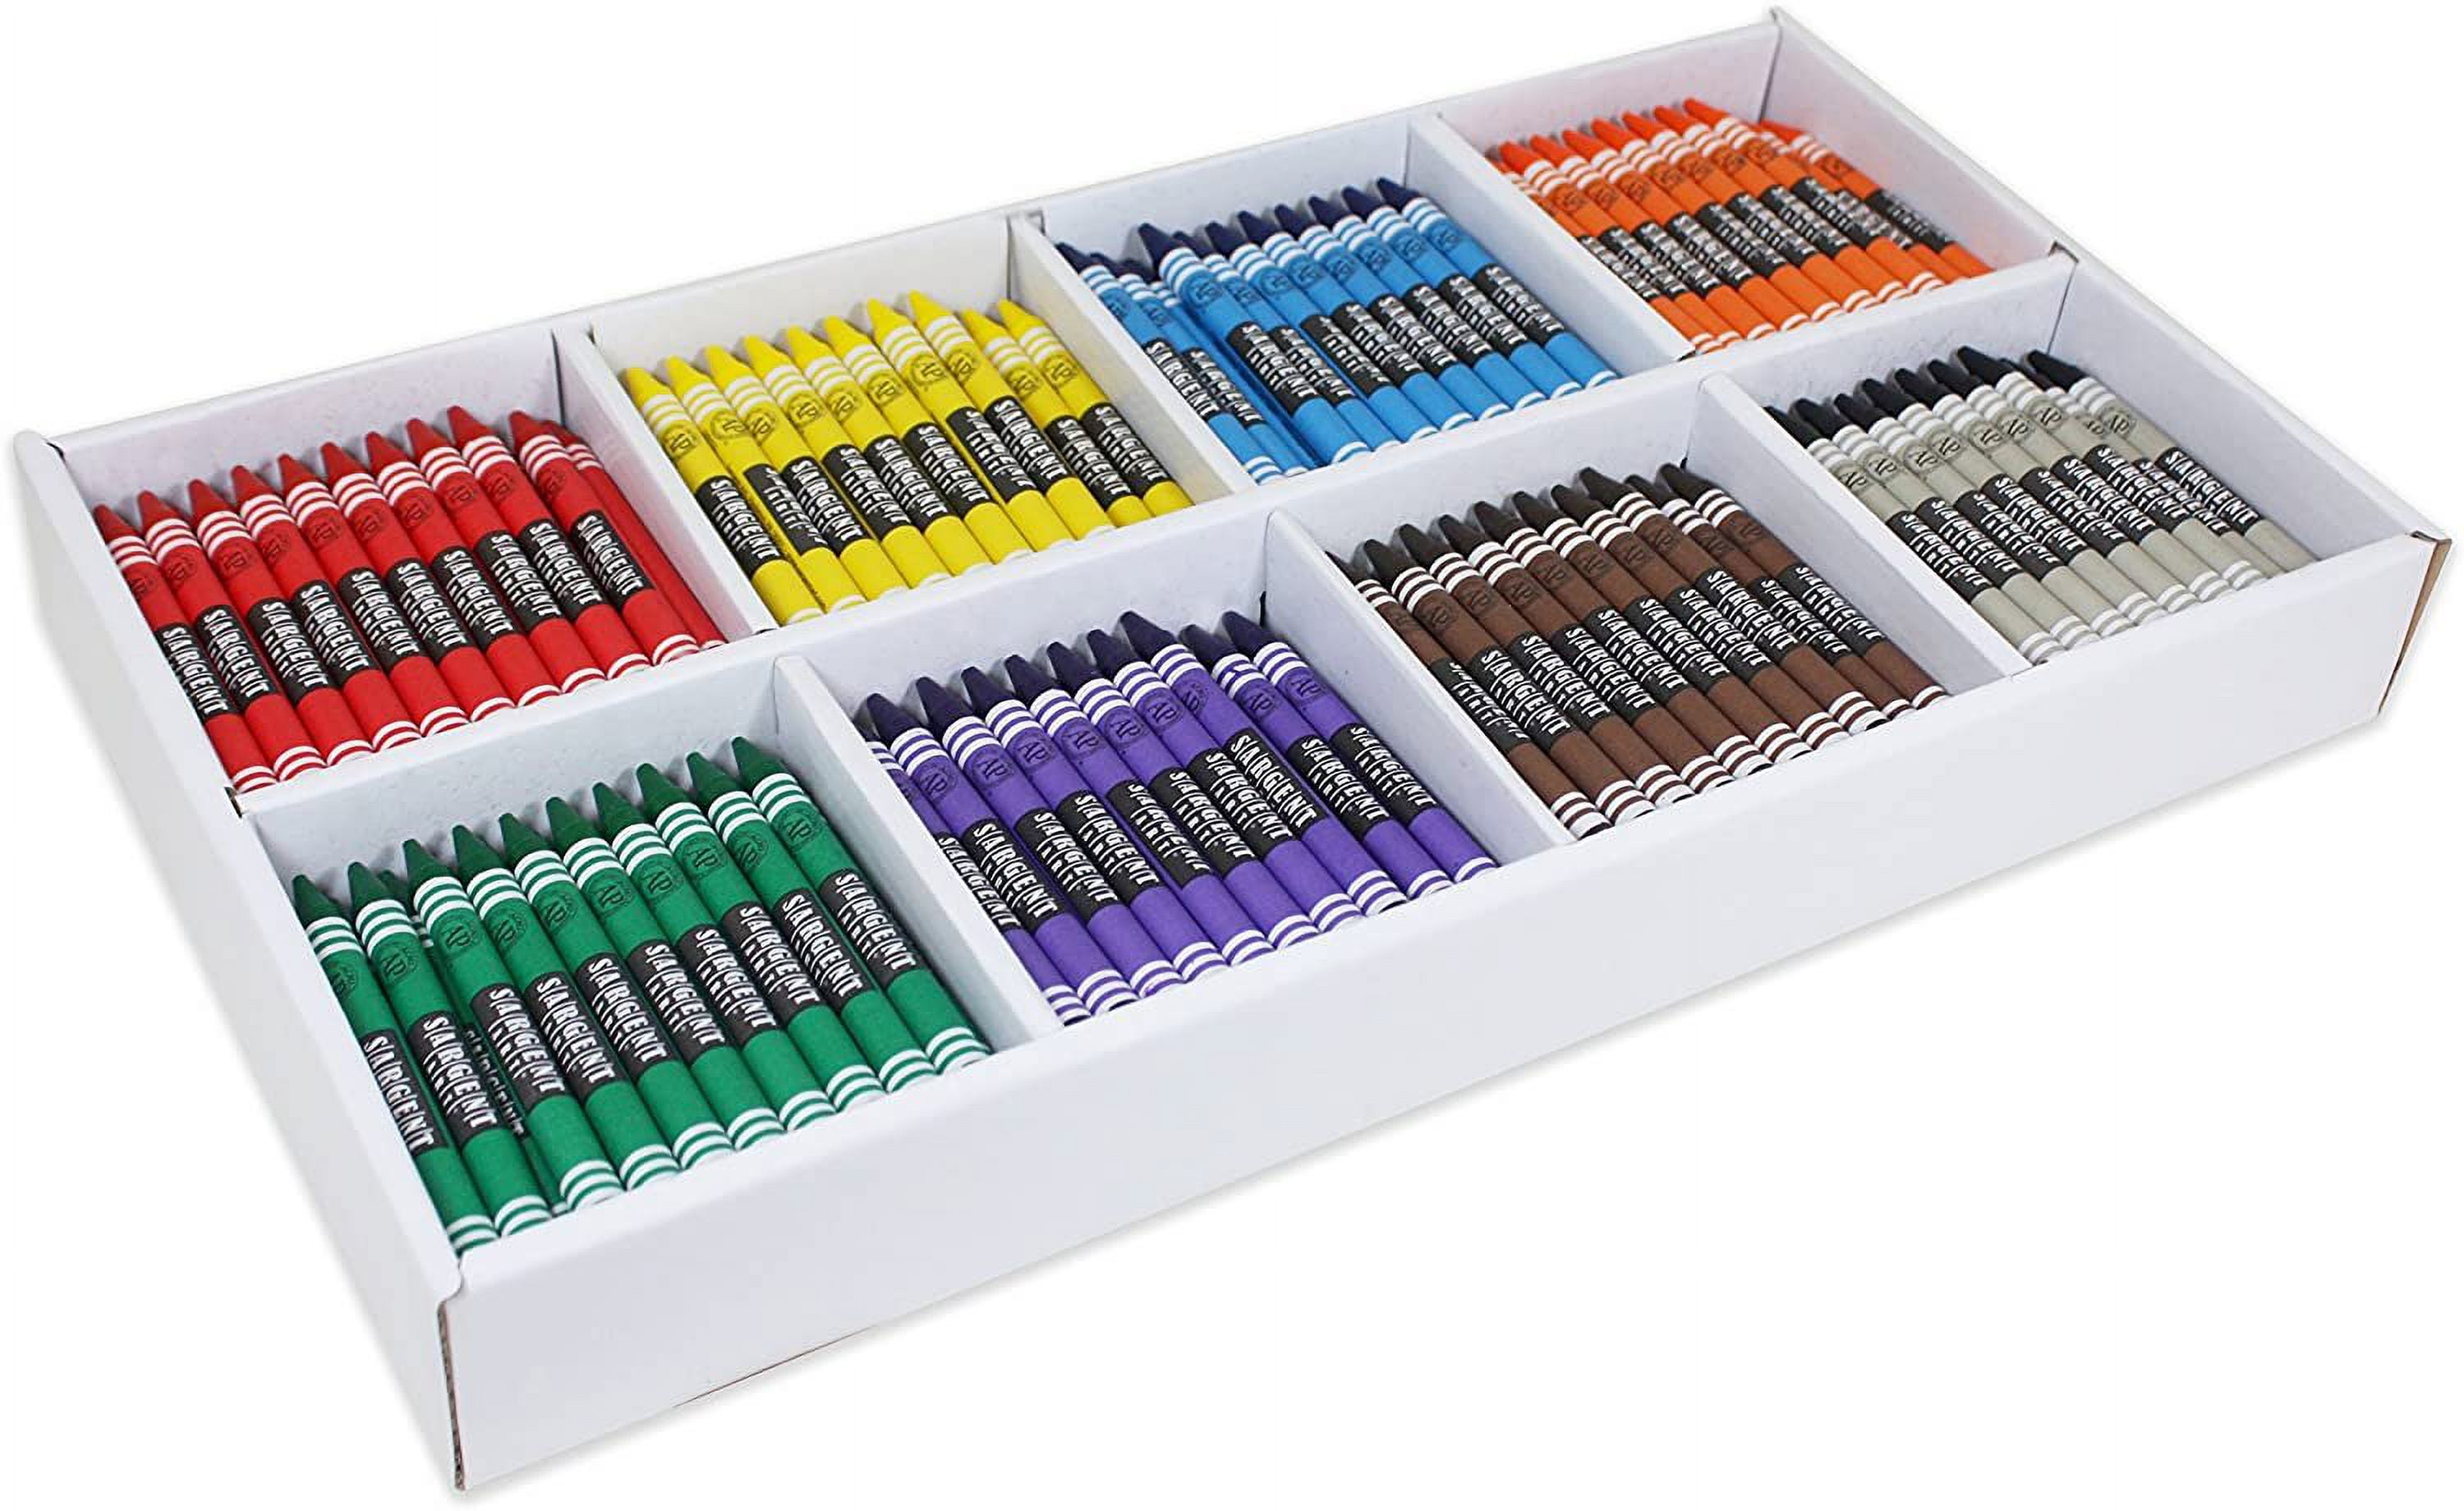 Crayola Crayon Classpack Large Crayons 400ct Bulk Crayons for Classroom  School Supplies for Teachers Standard Packaging